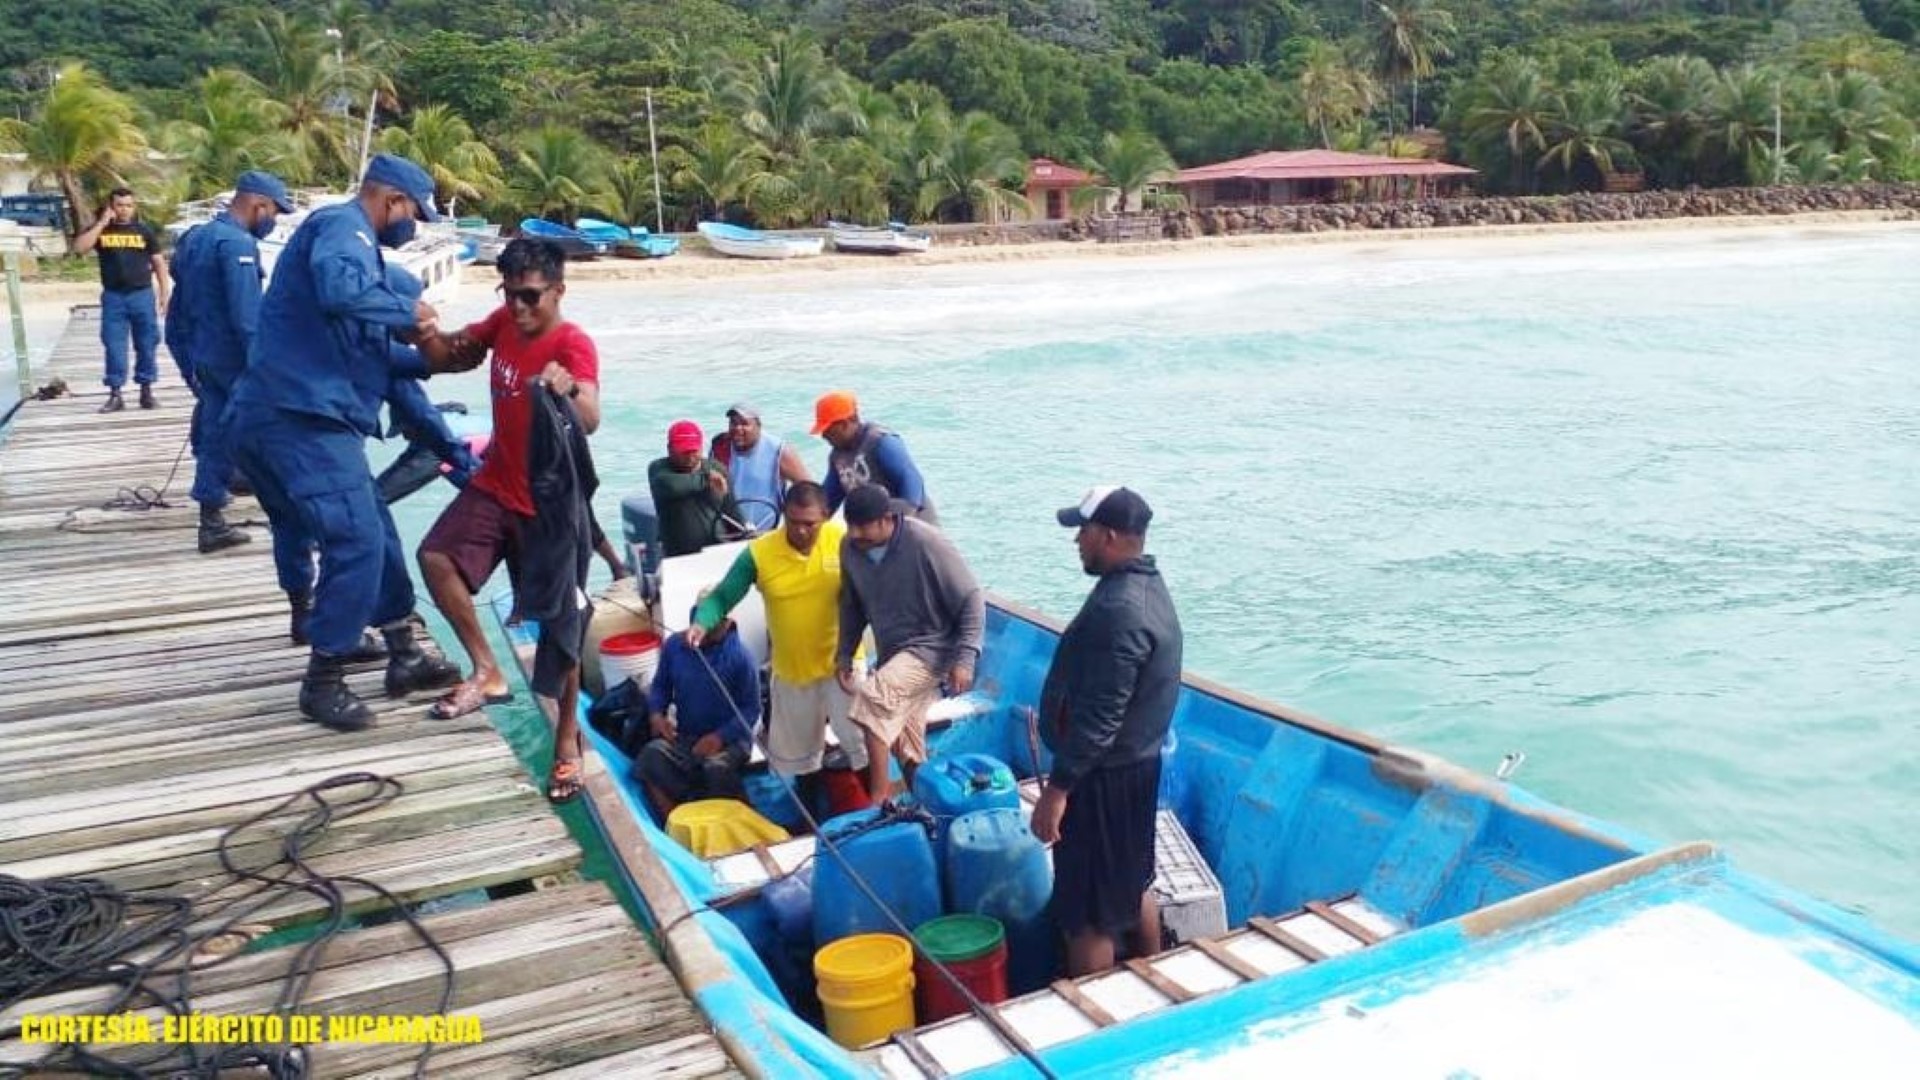 5 pescadores nicaraguenses son rescatados en el mar caribe